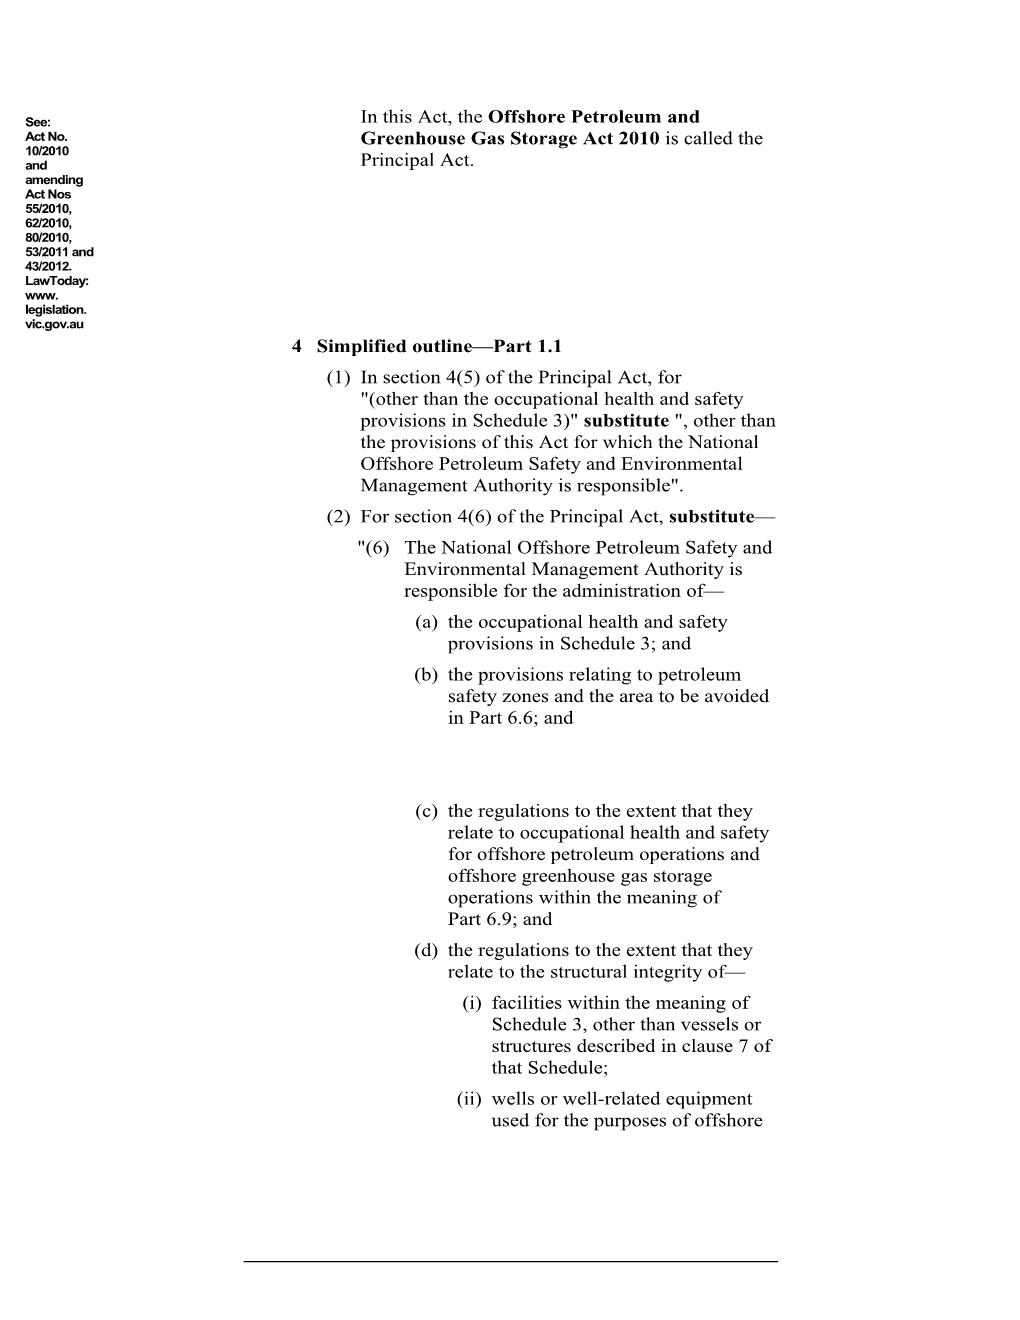 Offshore Petroleum and Greenhouse Gas Storage Amendment (NOPSEMA) Act 2012